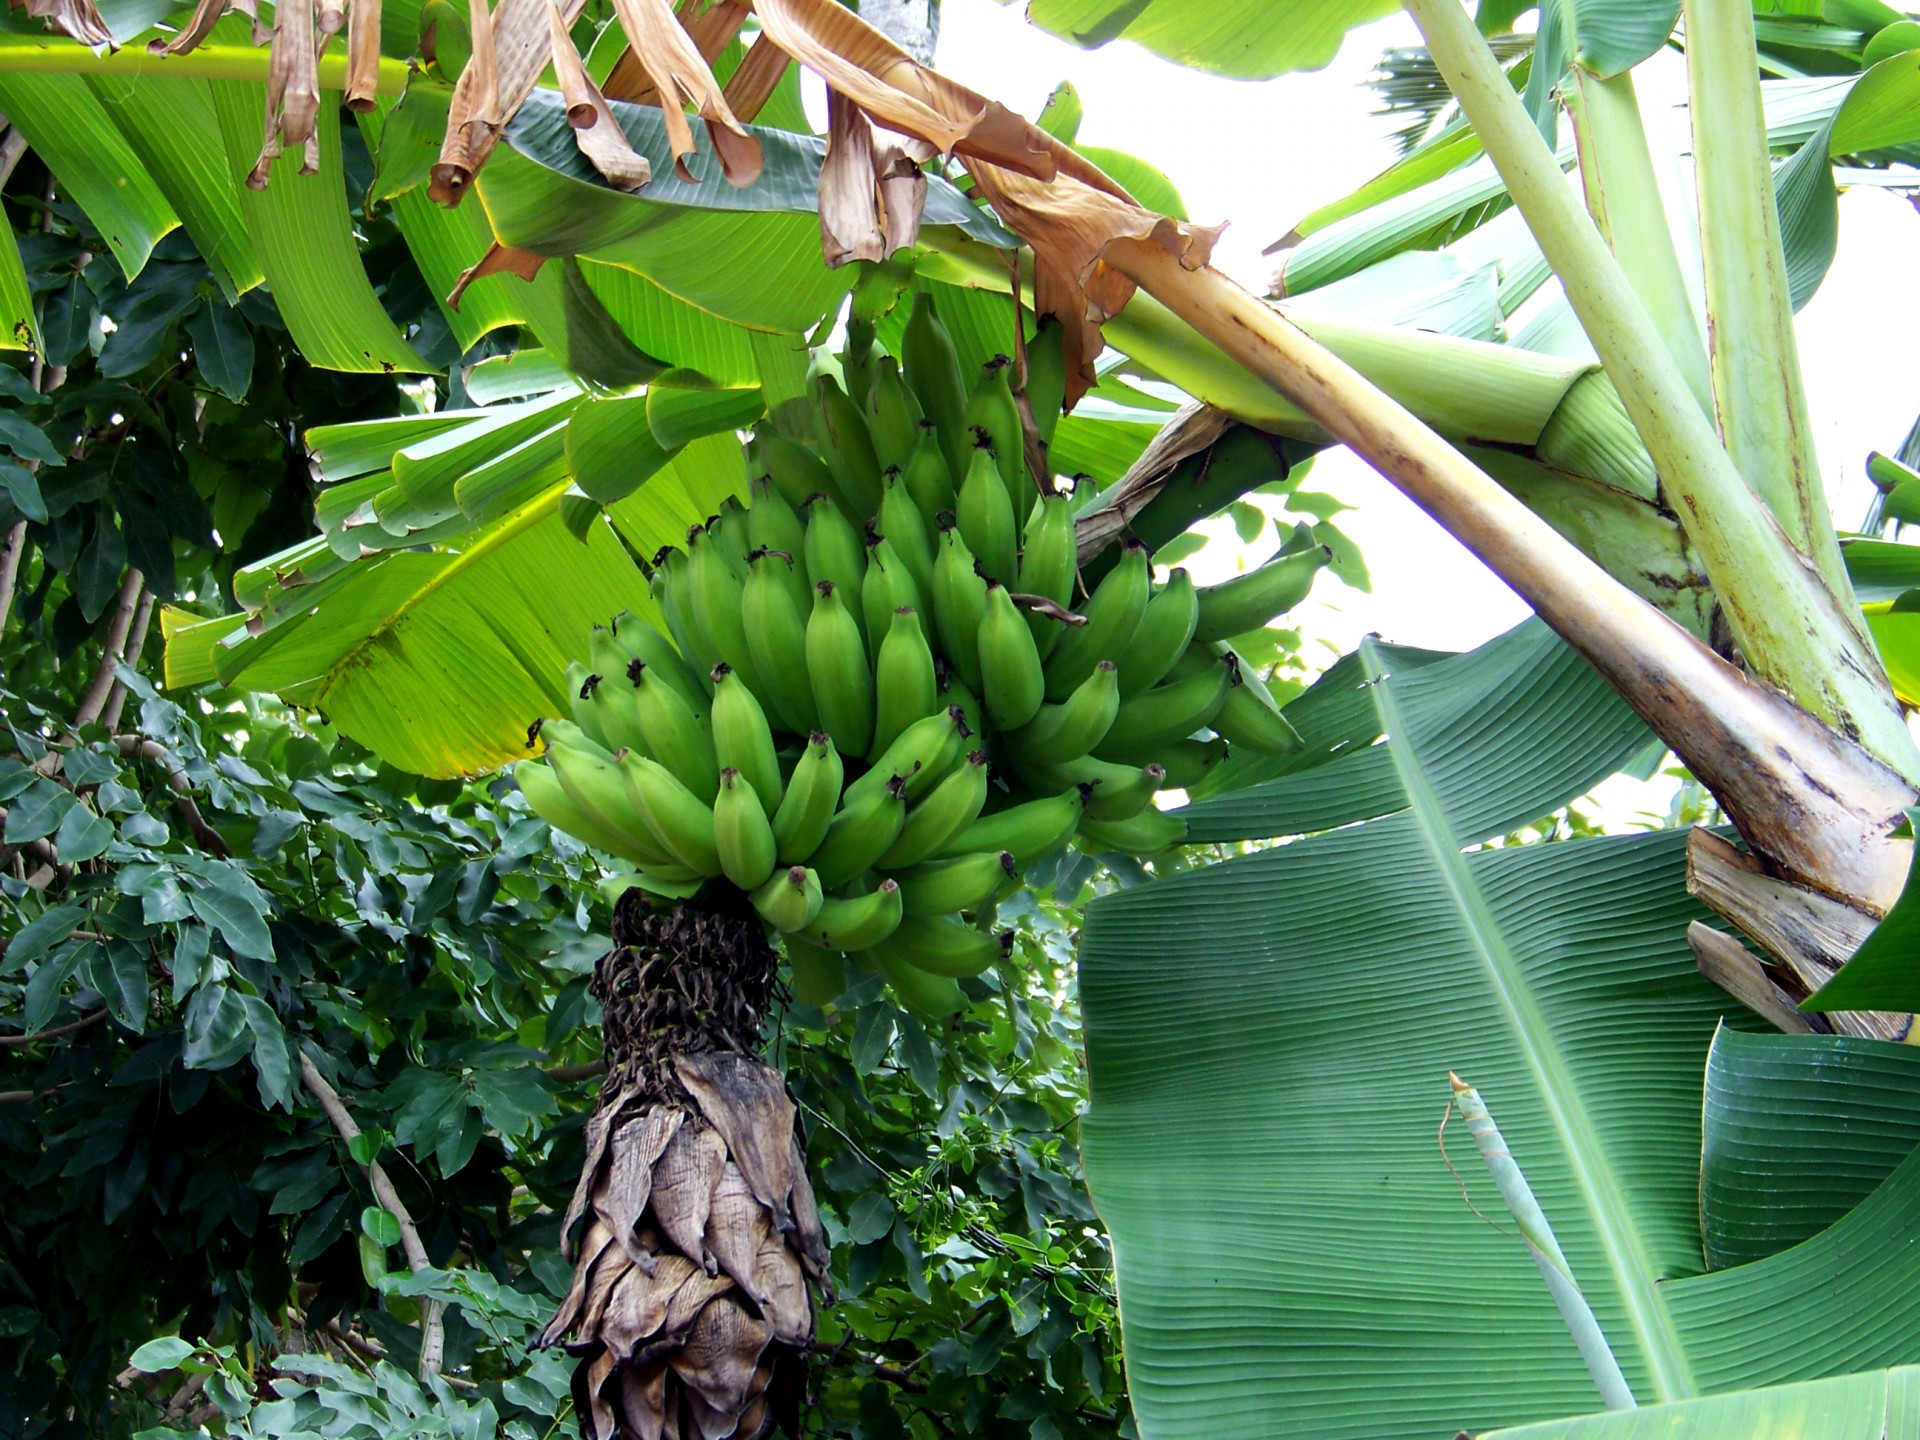 Bananas growing in banana plant